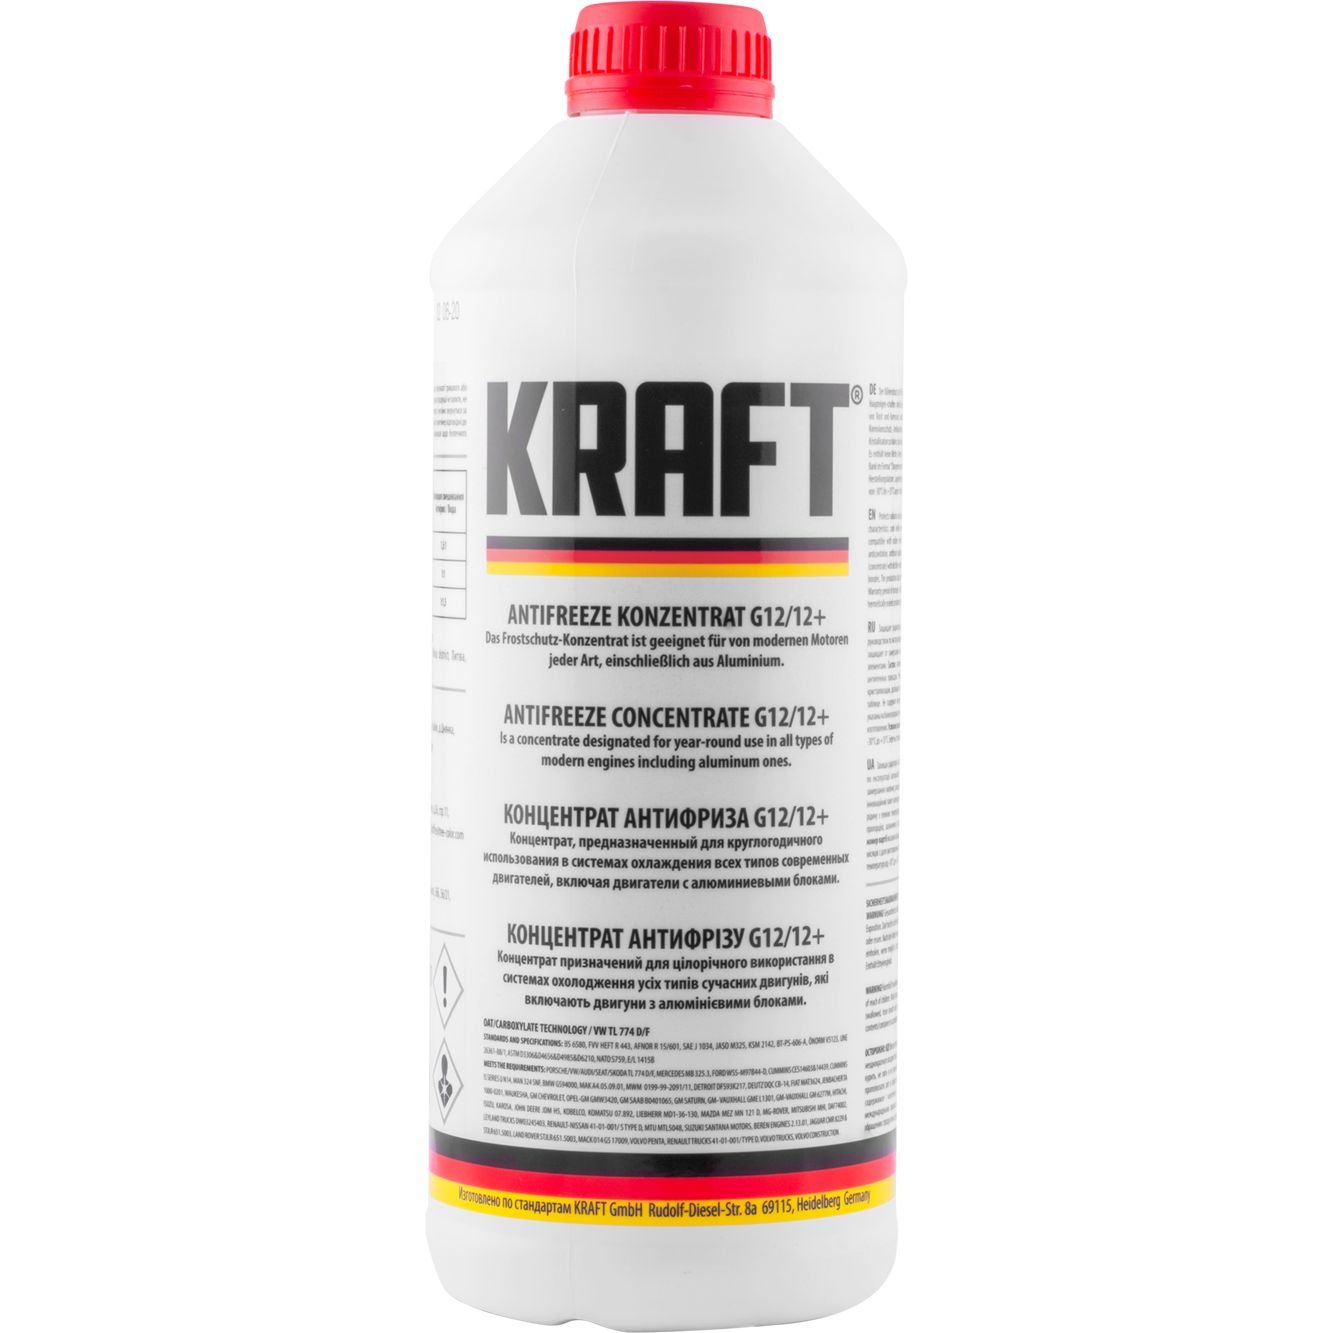 Концентрат антифриза Kraft G12/G12+, 1.5 л красный - фото 1